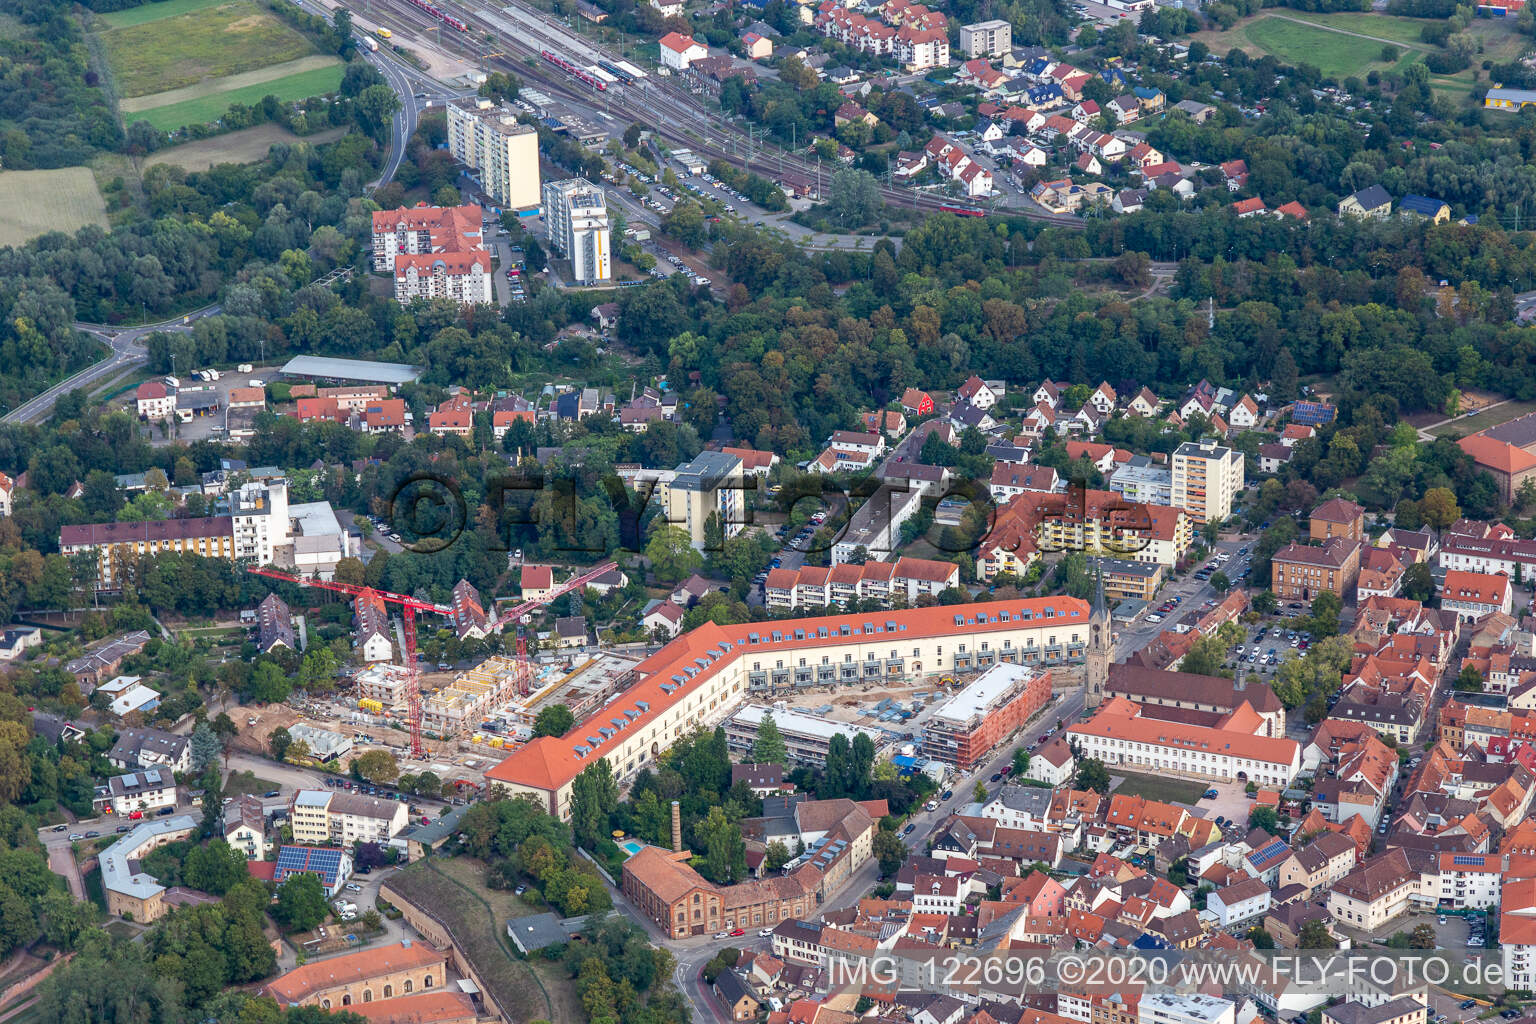 Former Stenel barracks in Germersheim in the state Rhineland-Palatinate, Germany